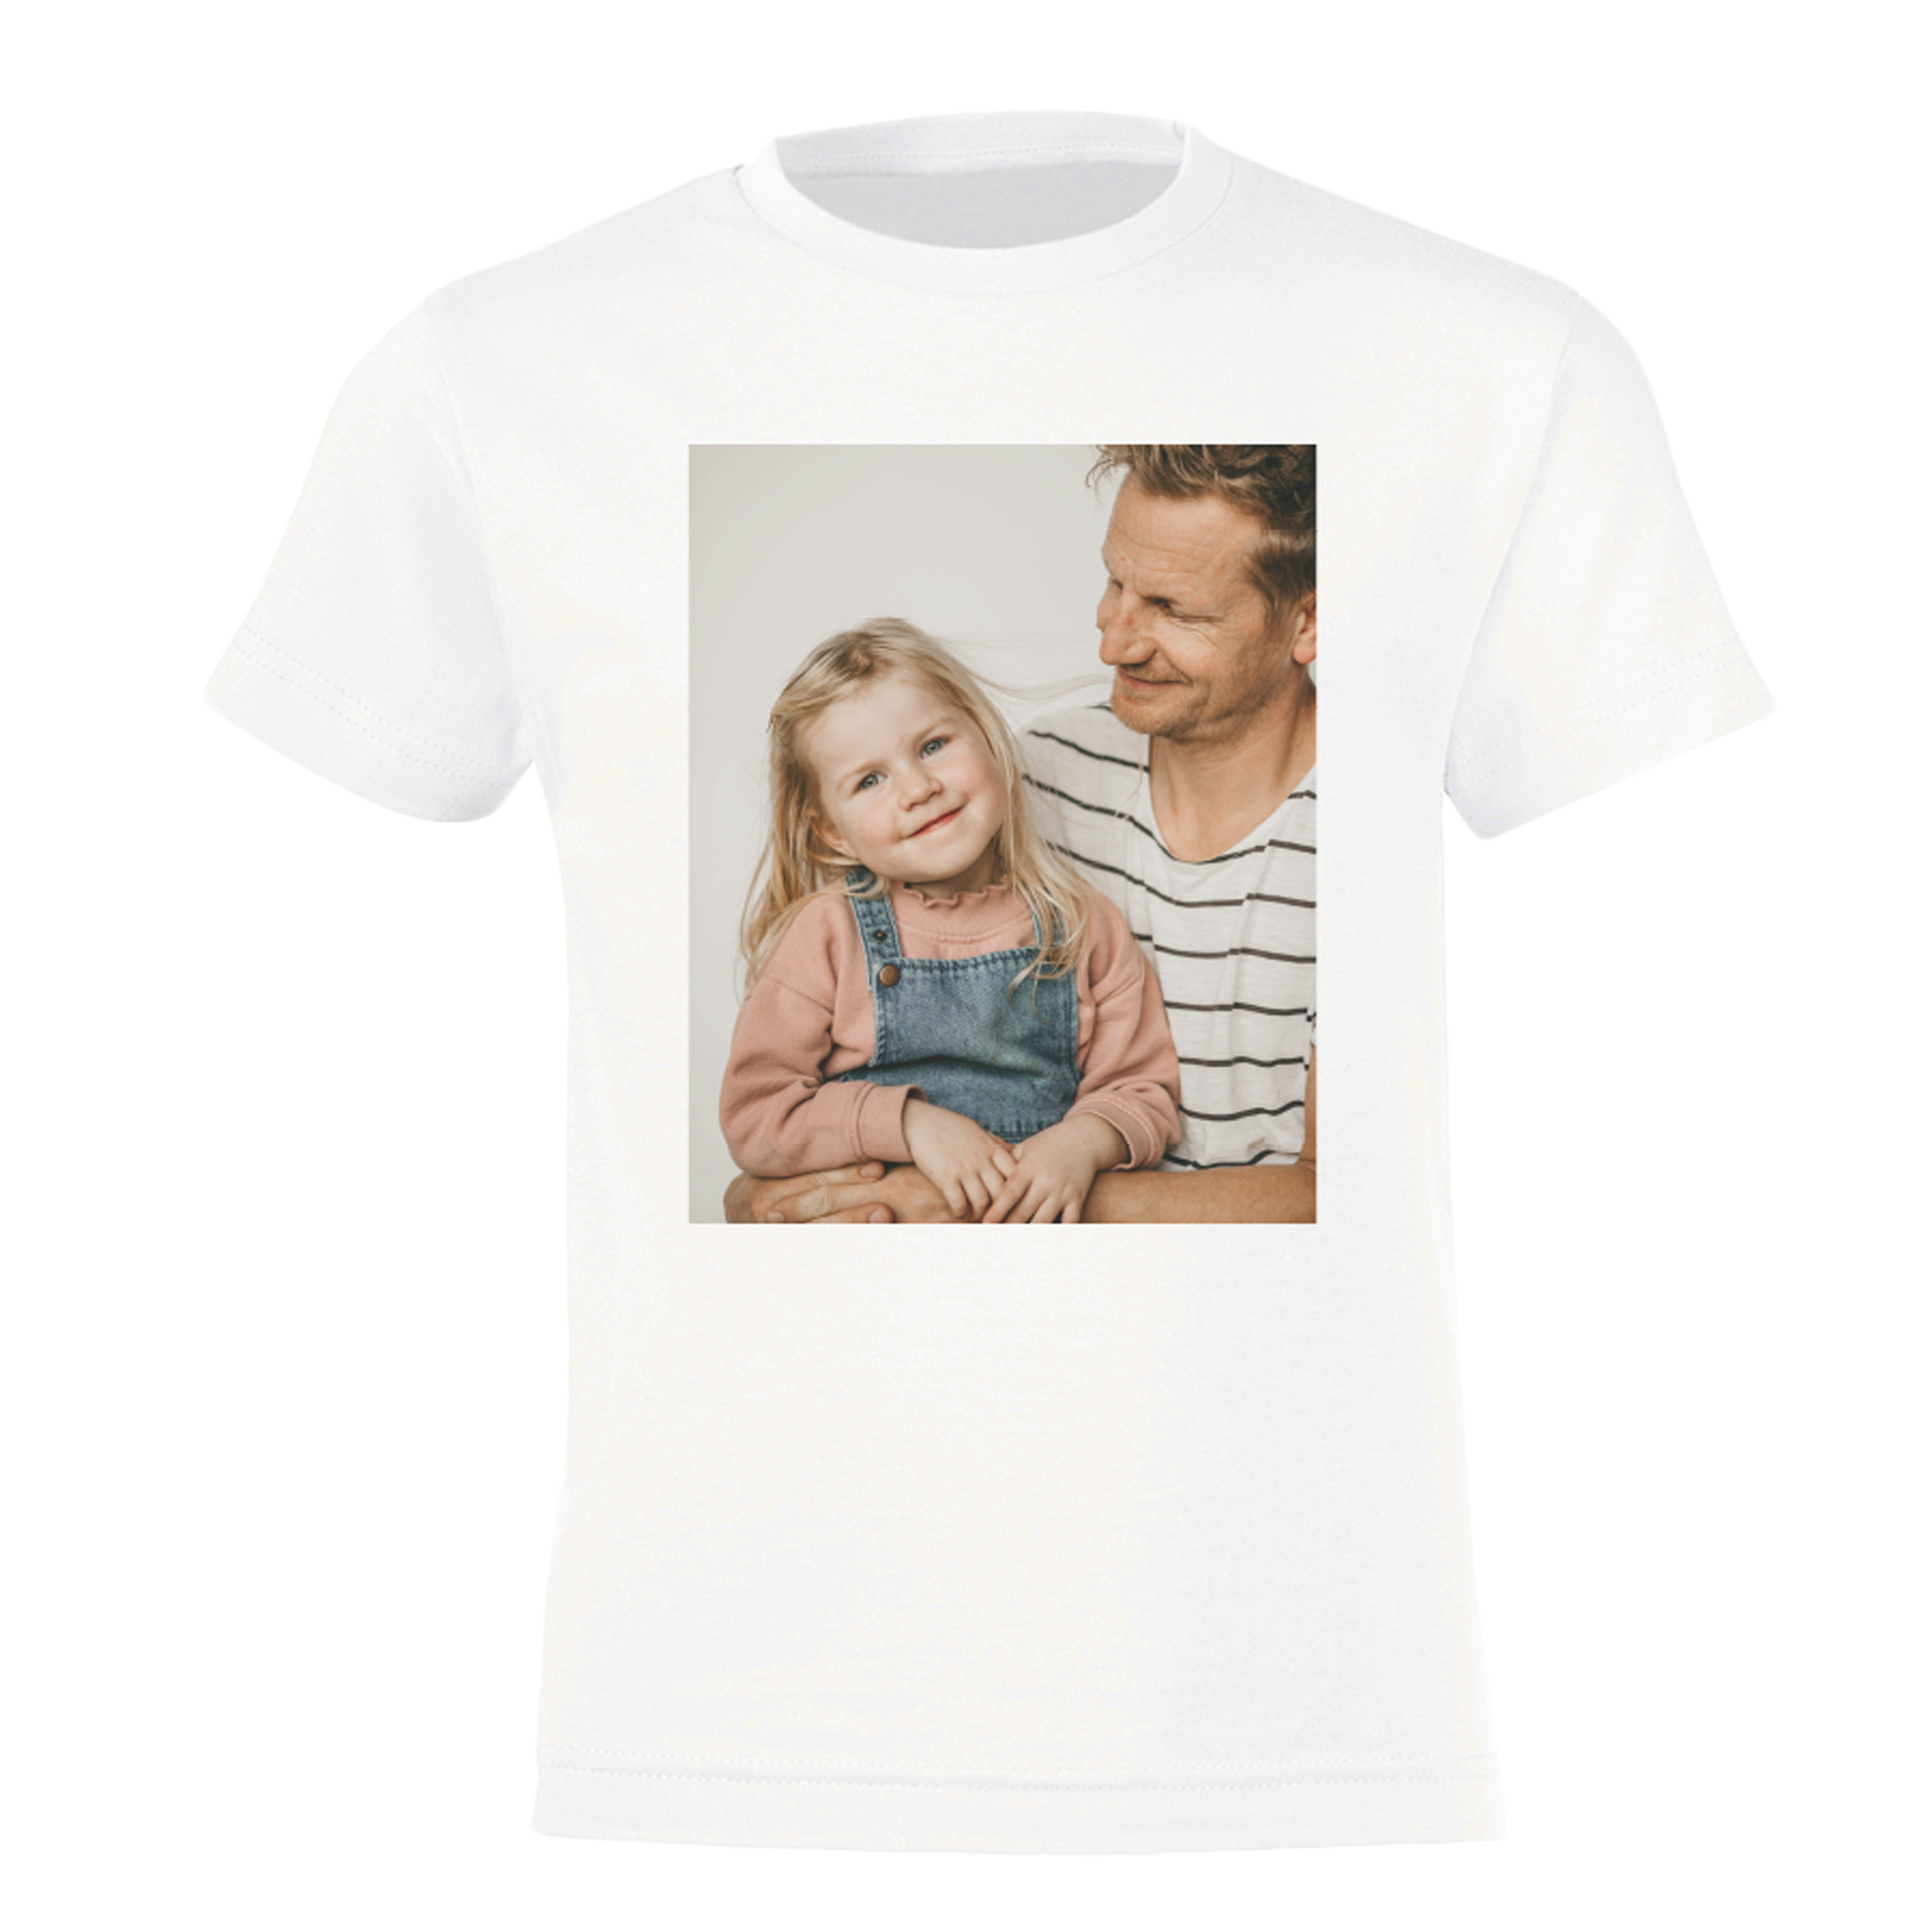 T-shirts Enfant